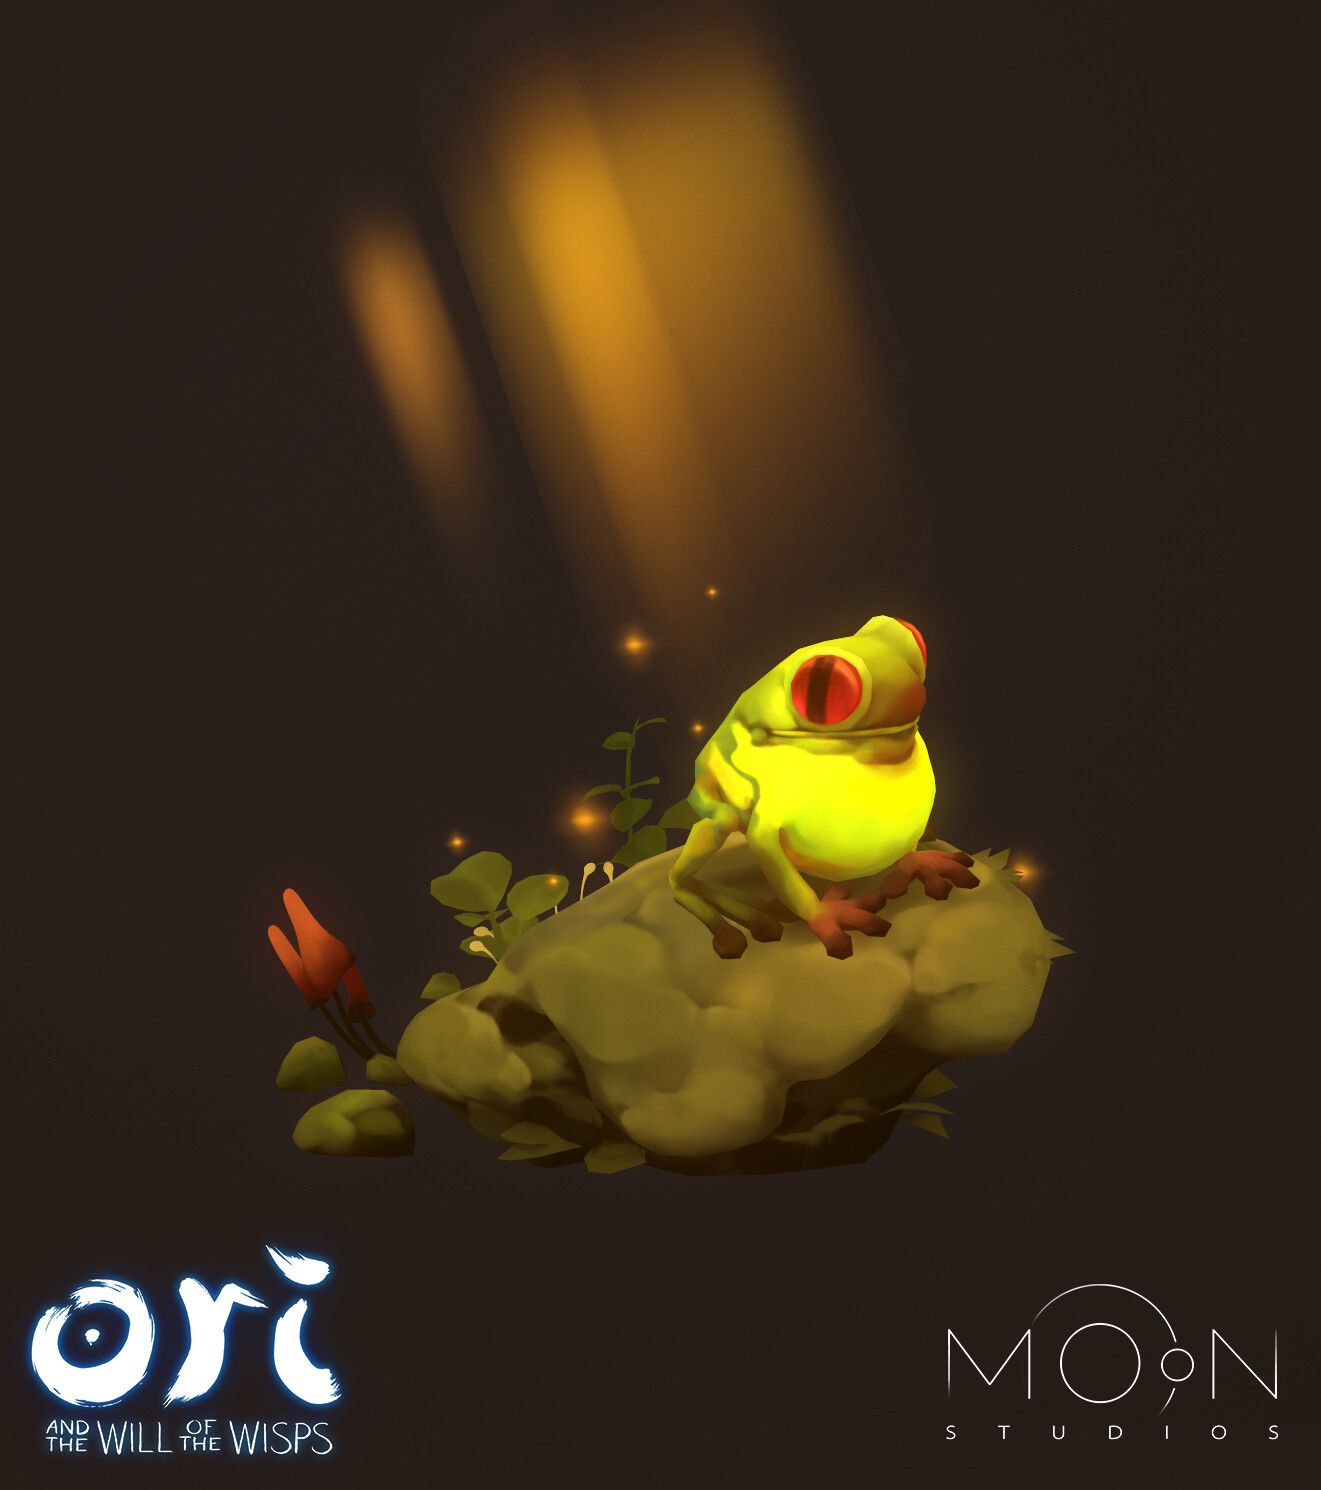 Cute Frog =)
Concept by Mickhail Rakhmatullin  